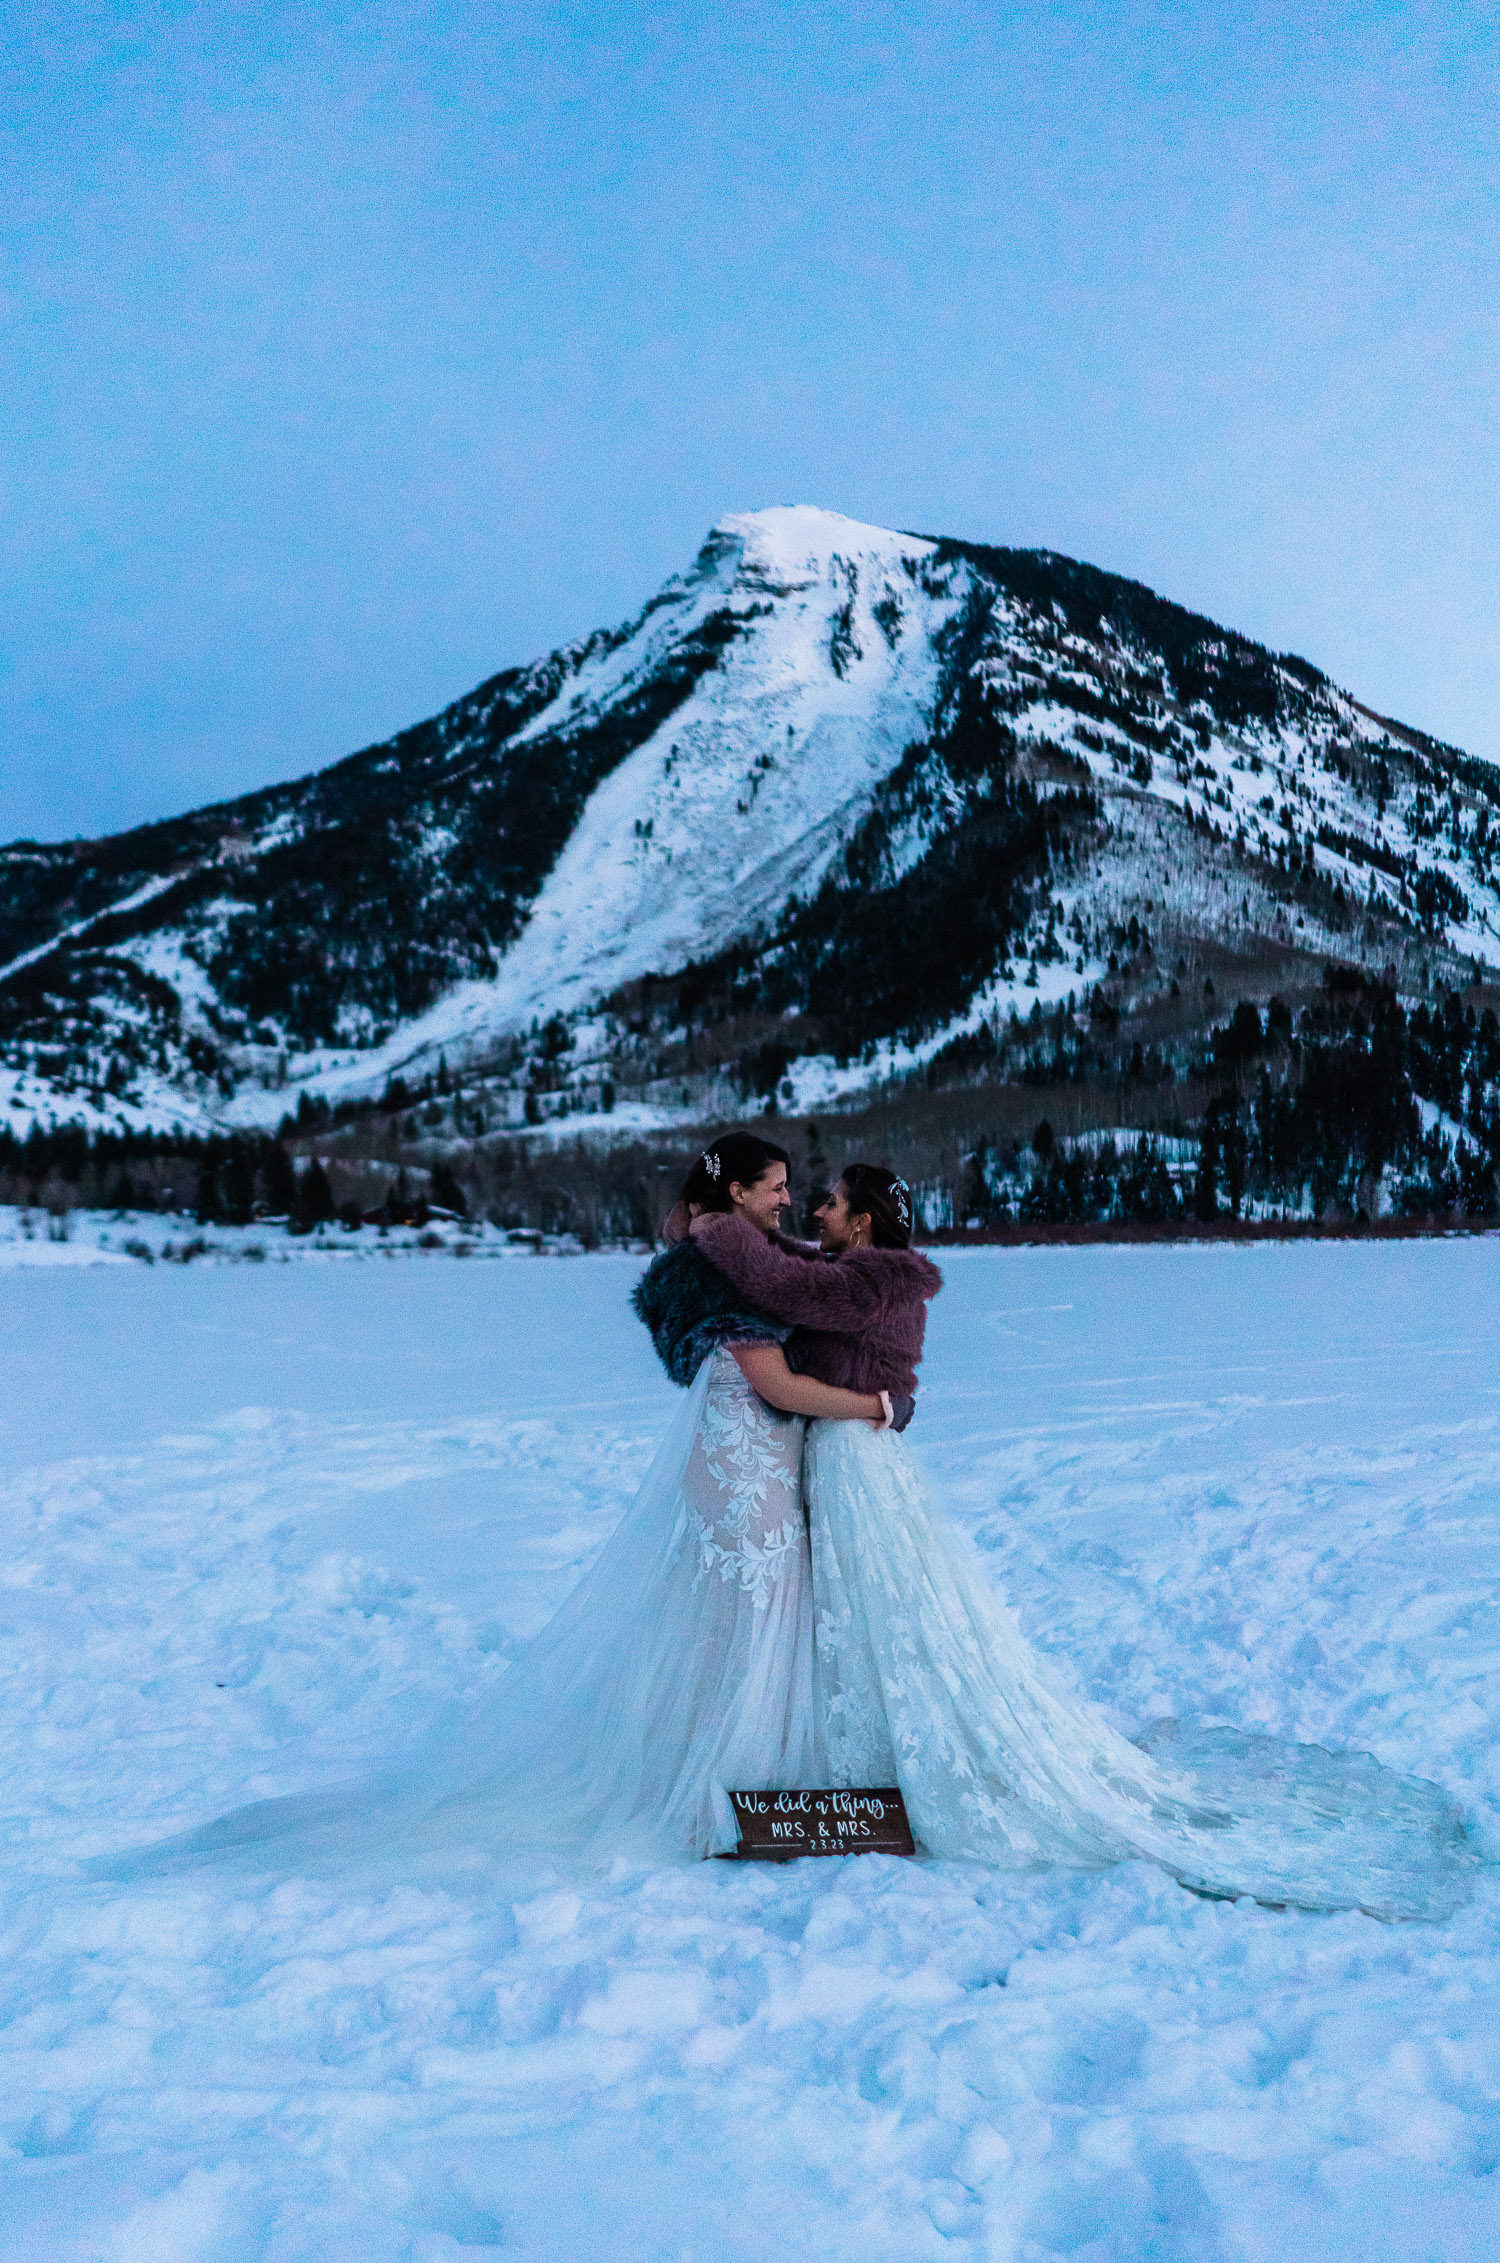 newlywed brides snuggling near a snowy mountain